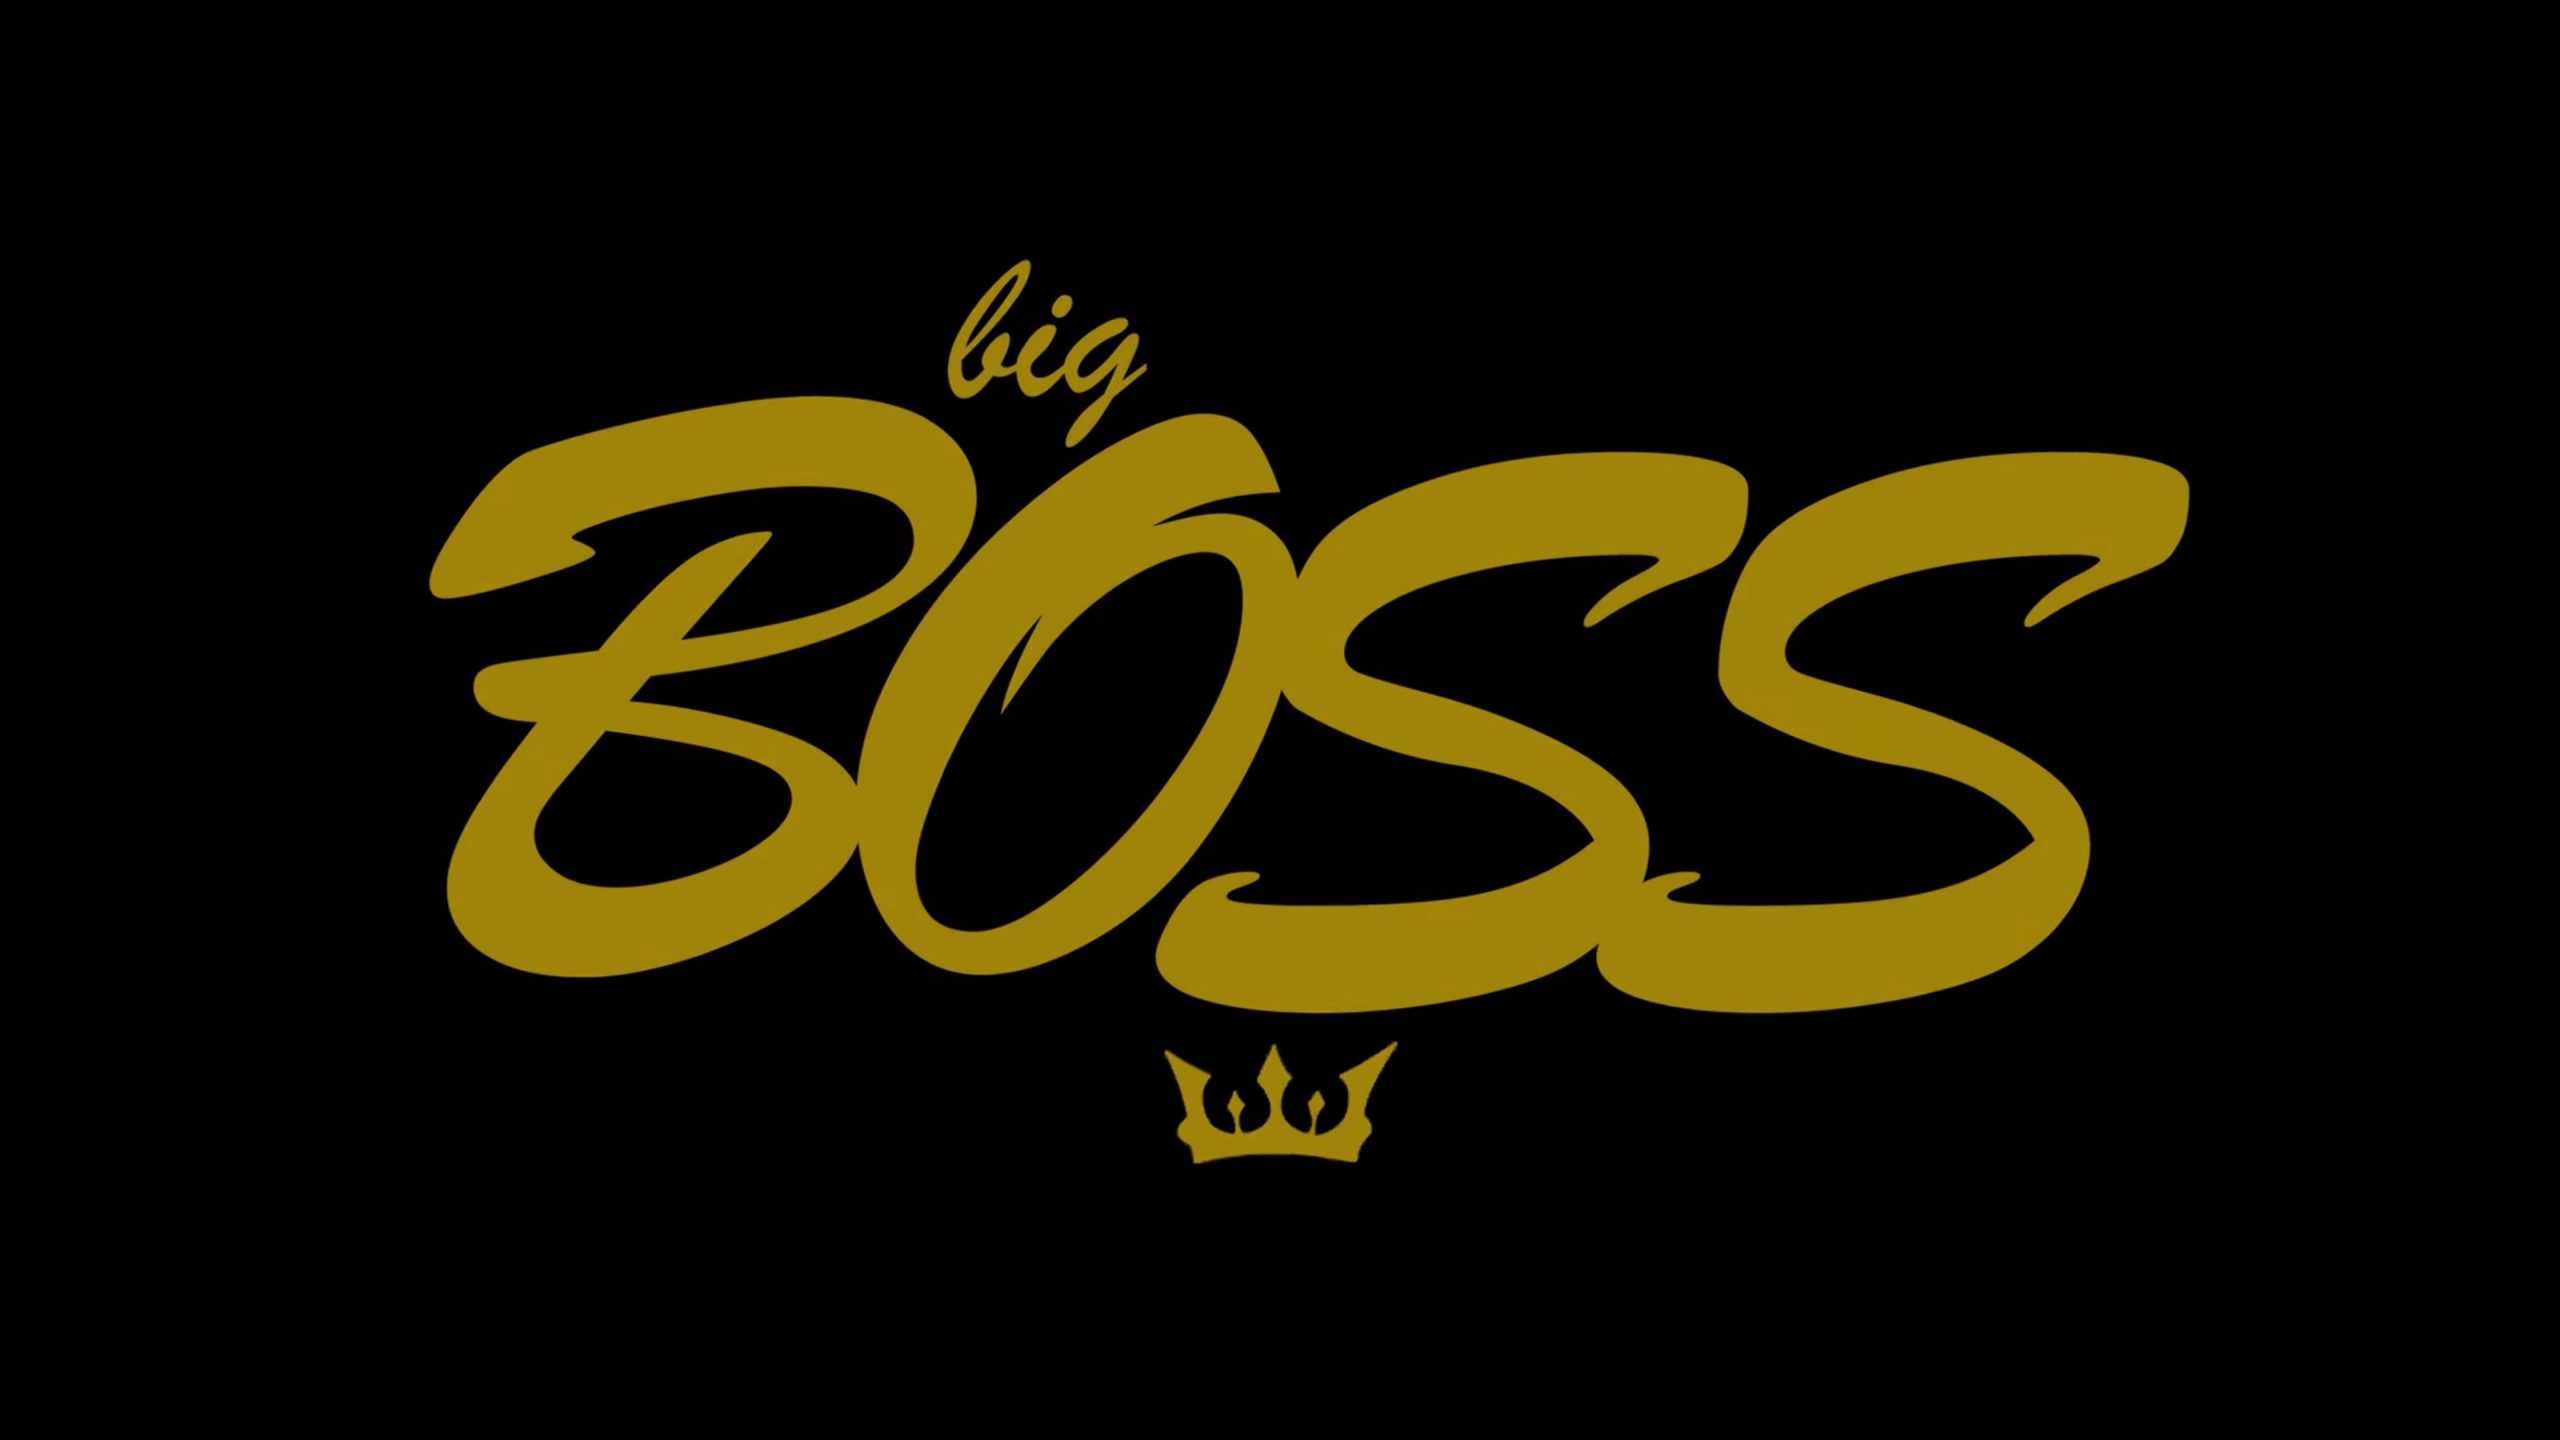 Title Card - Big Boss